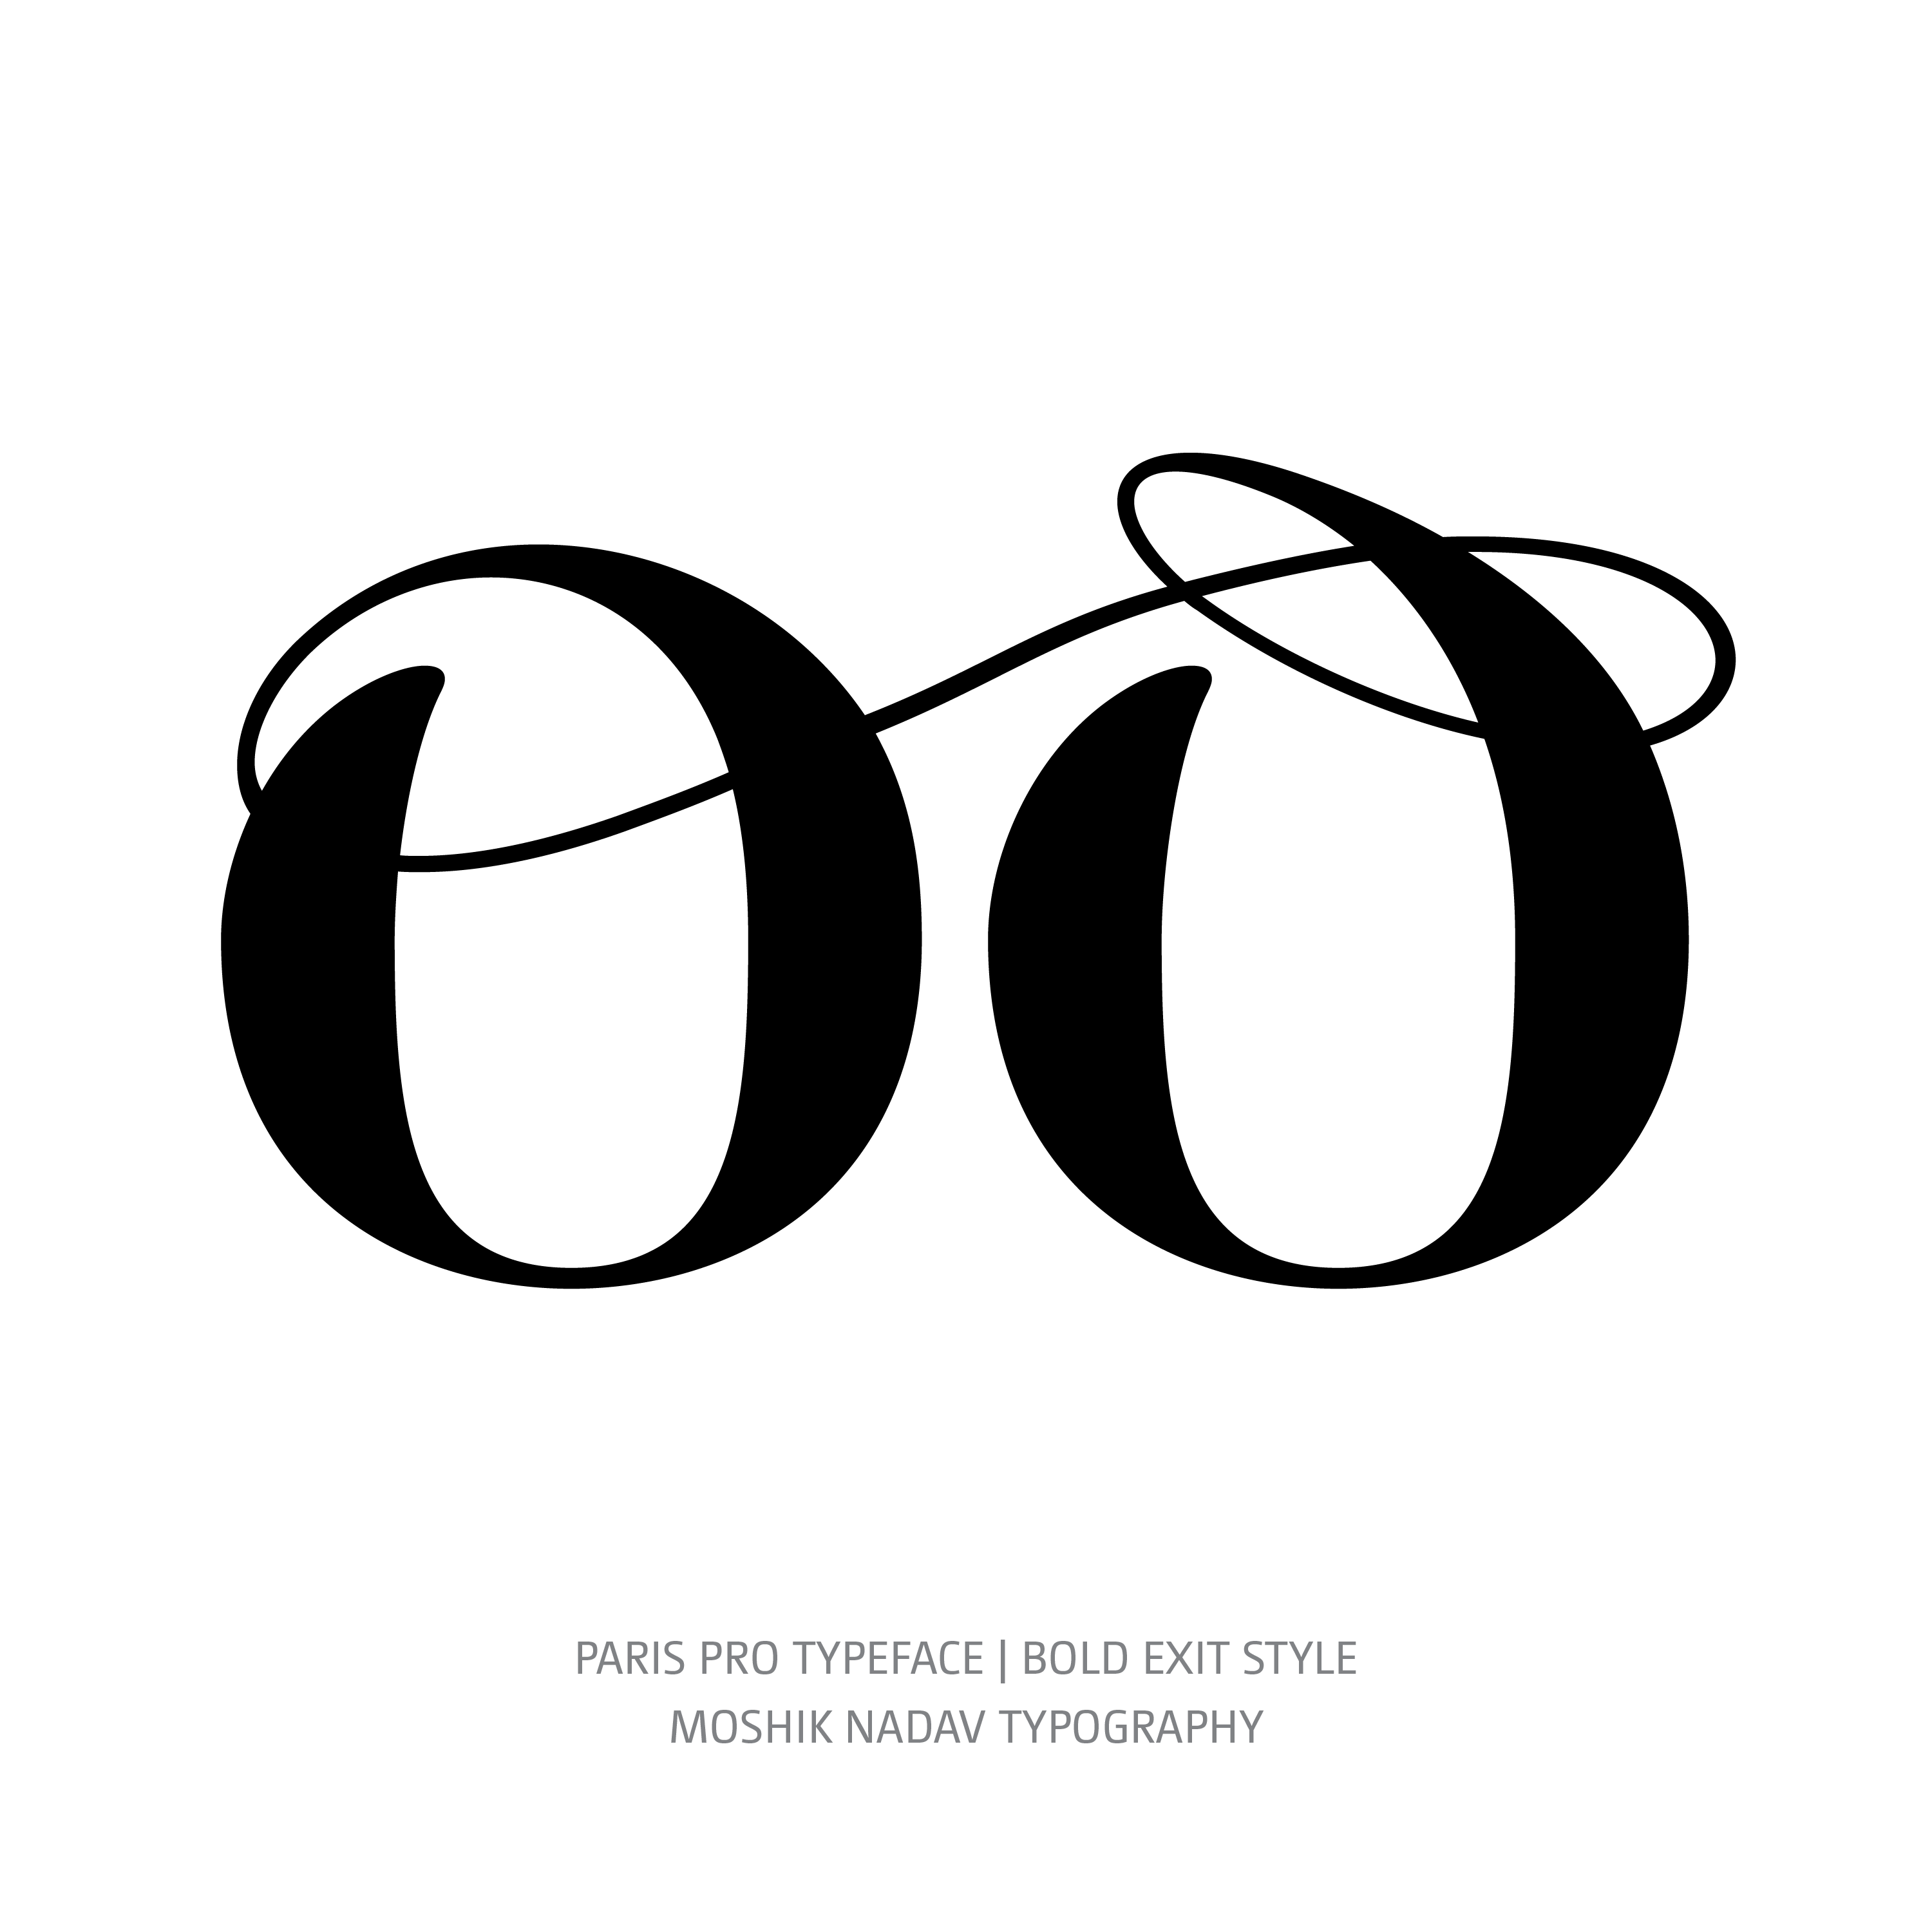 Paris Pro Typeface Regular Bold oo ligature